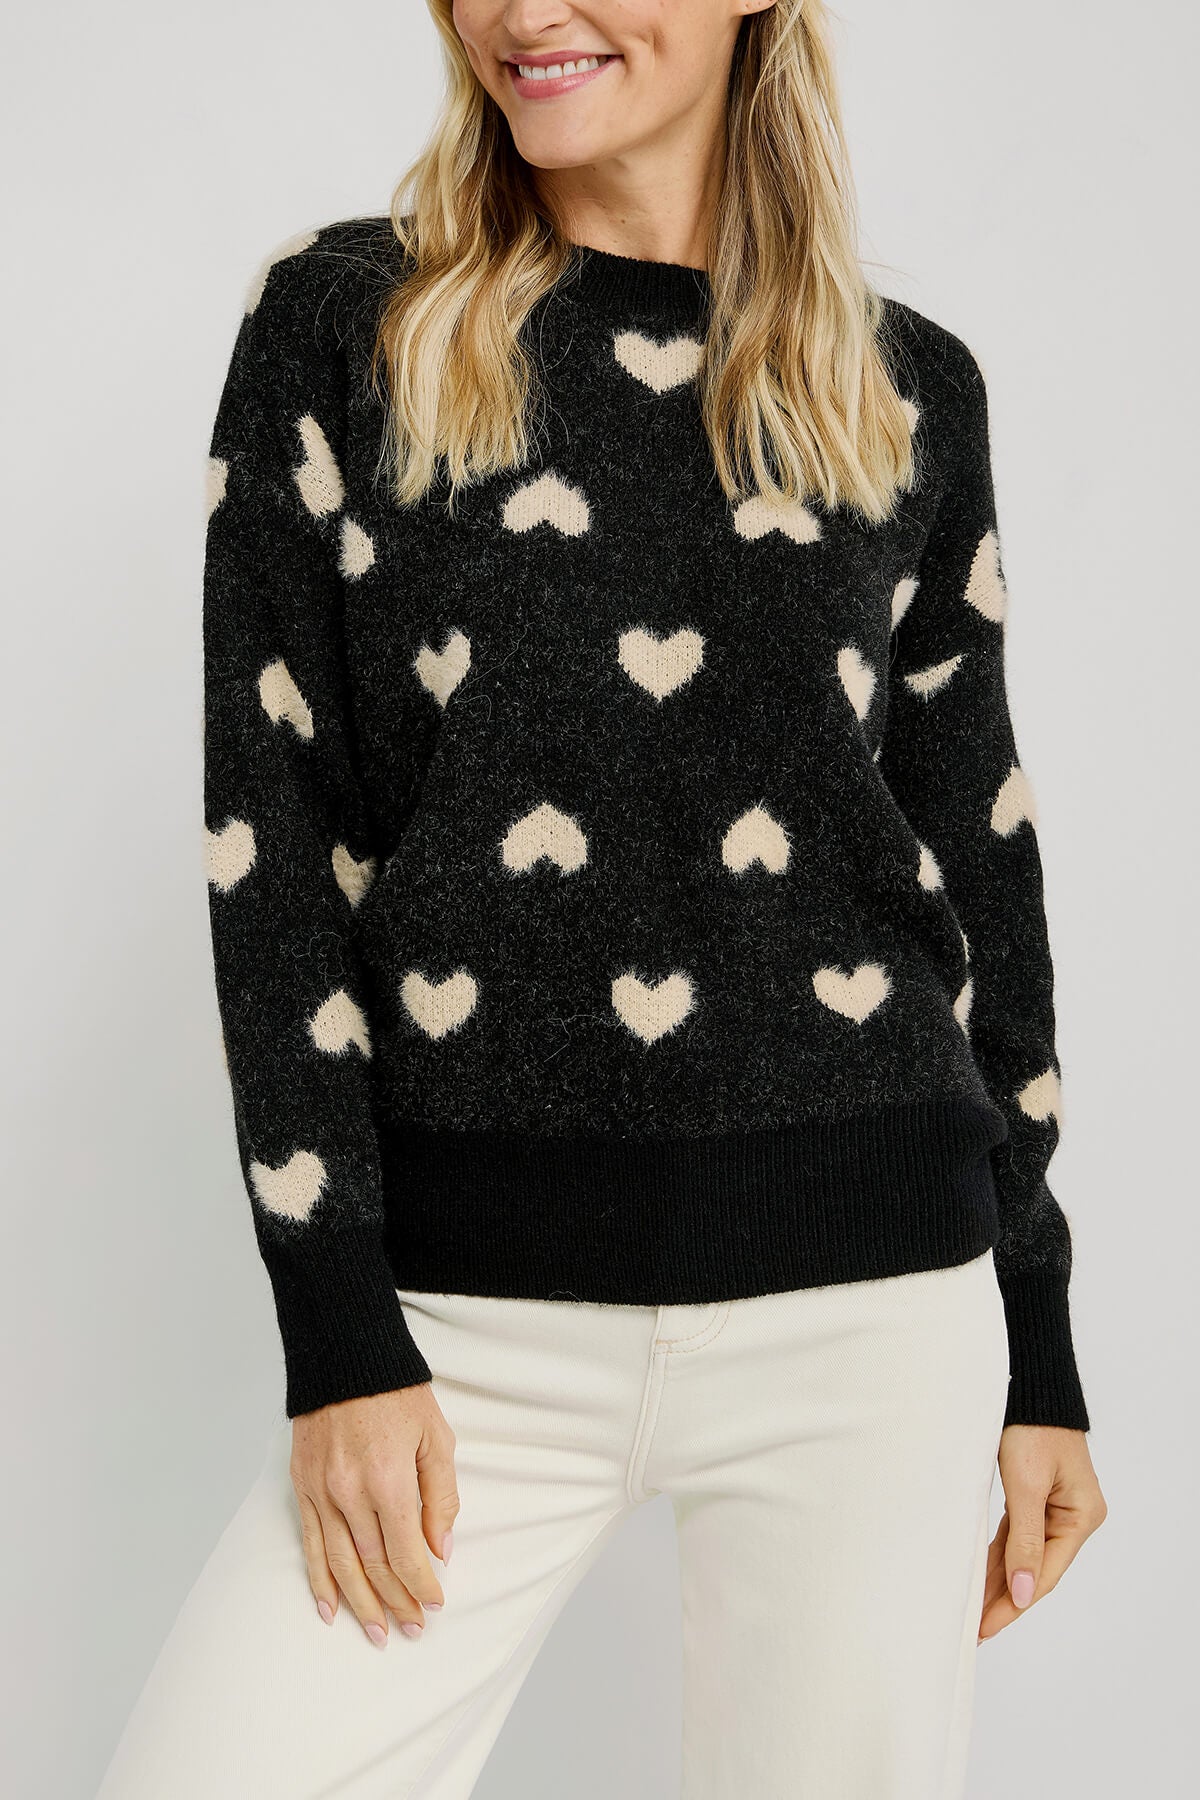 Molly Bracken Crewneck Heart Sweater